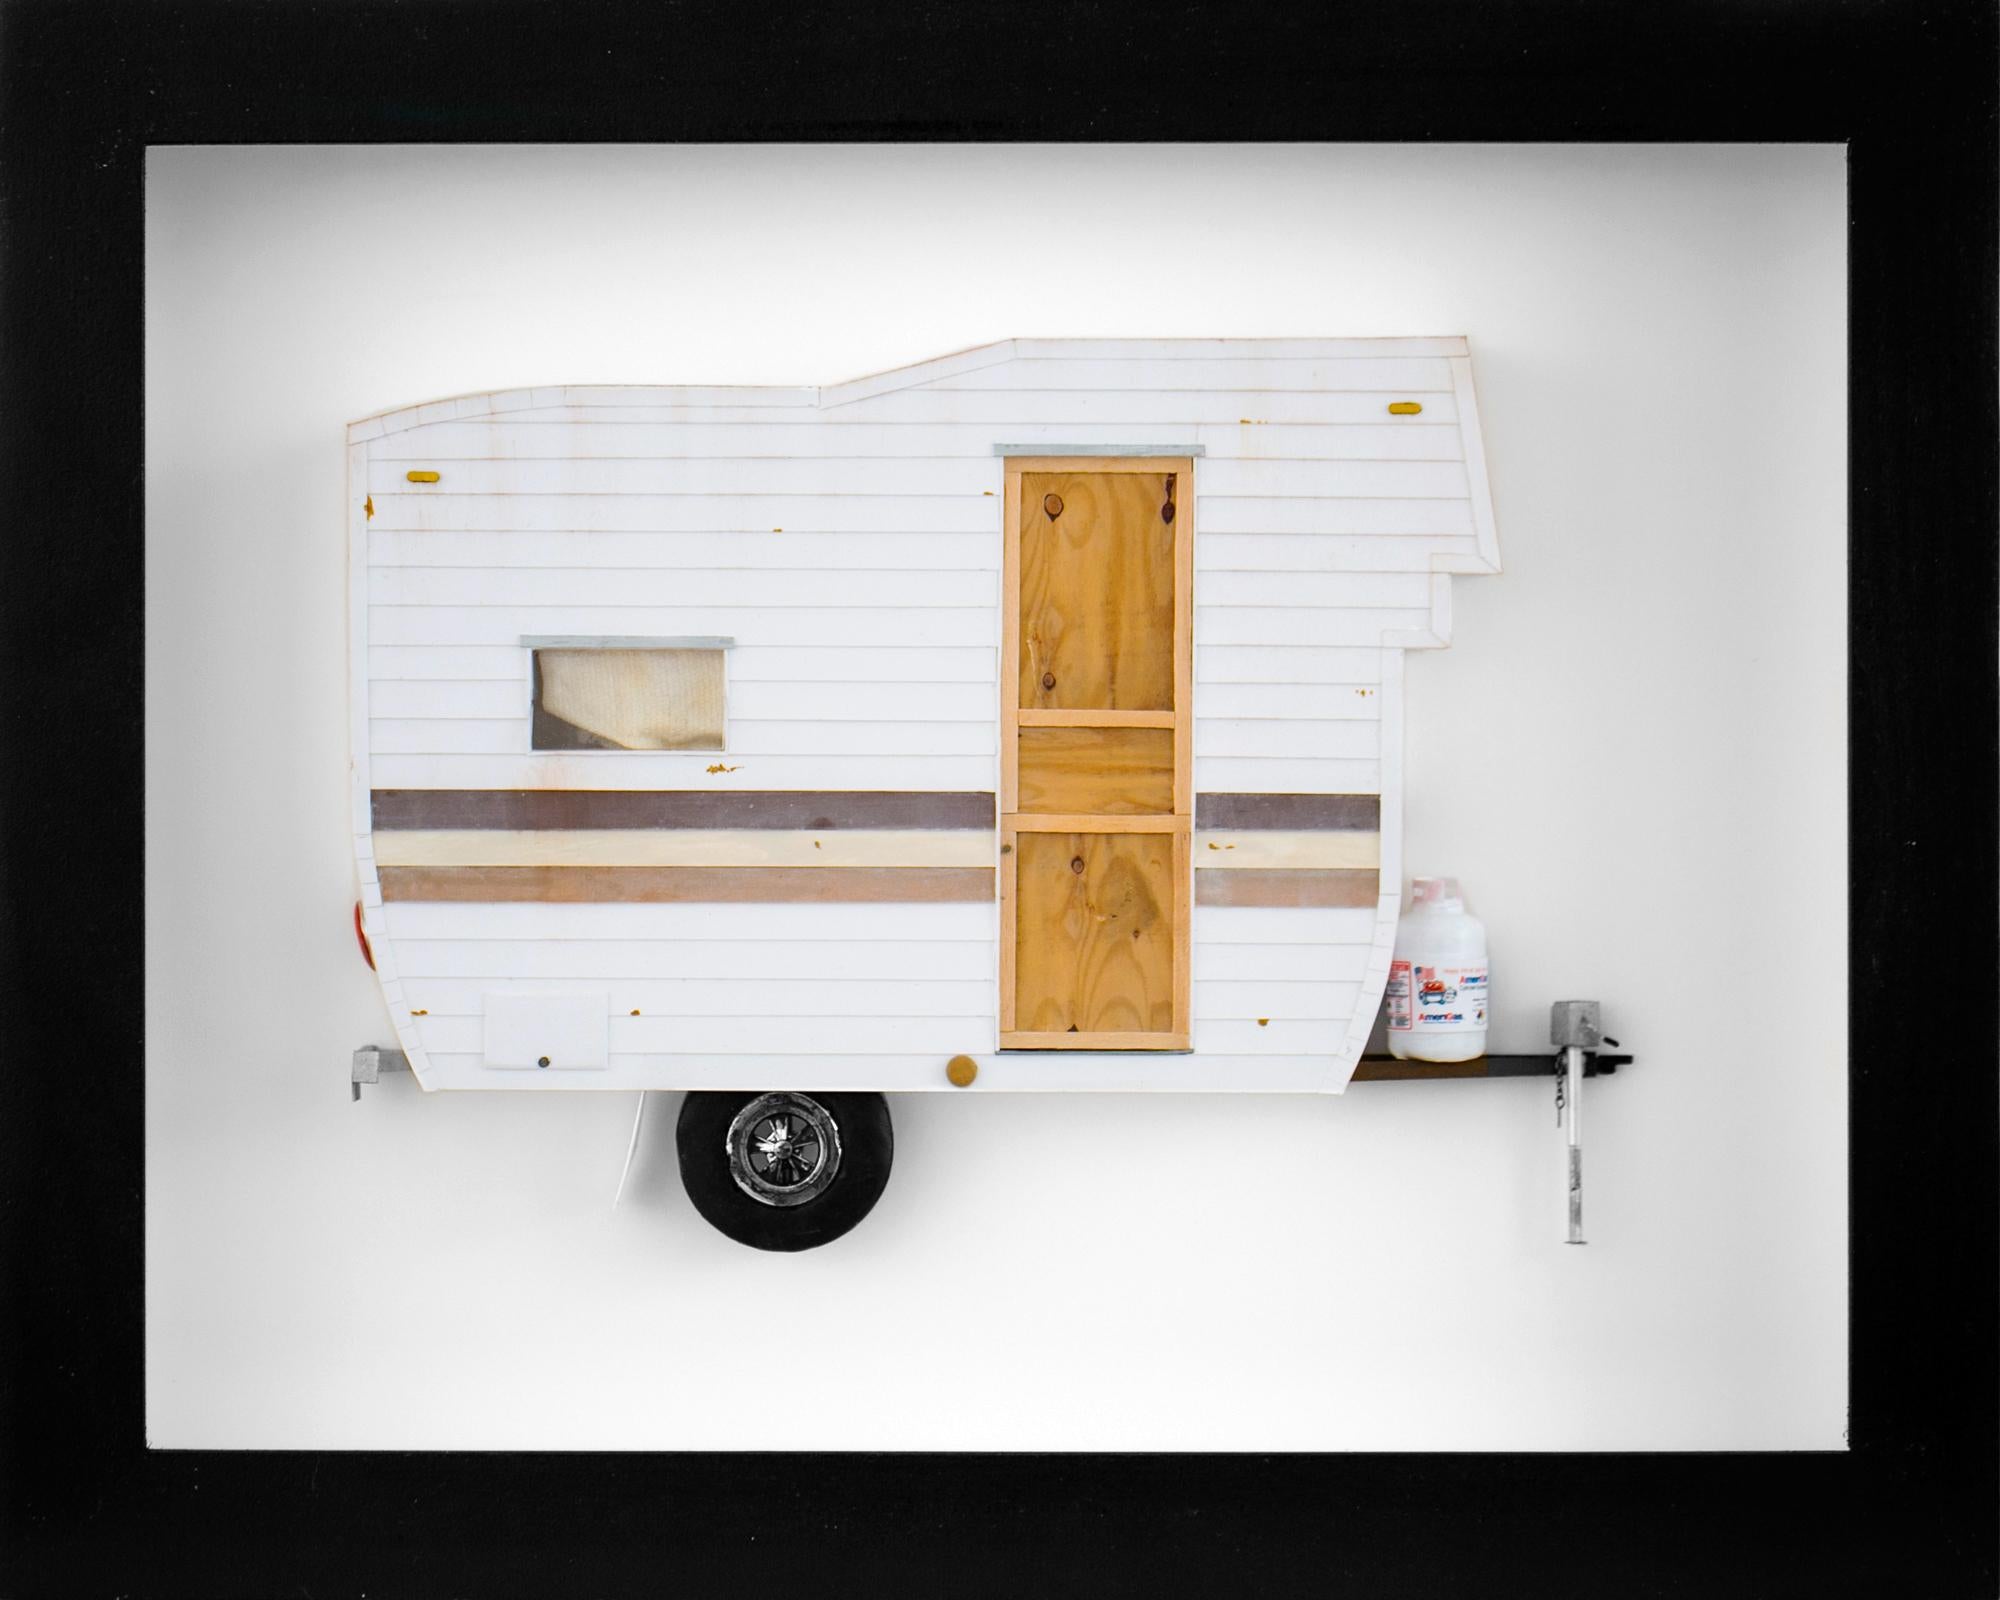 "GO AWAY", Miniature, camping trailer van, paper sculpture